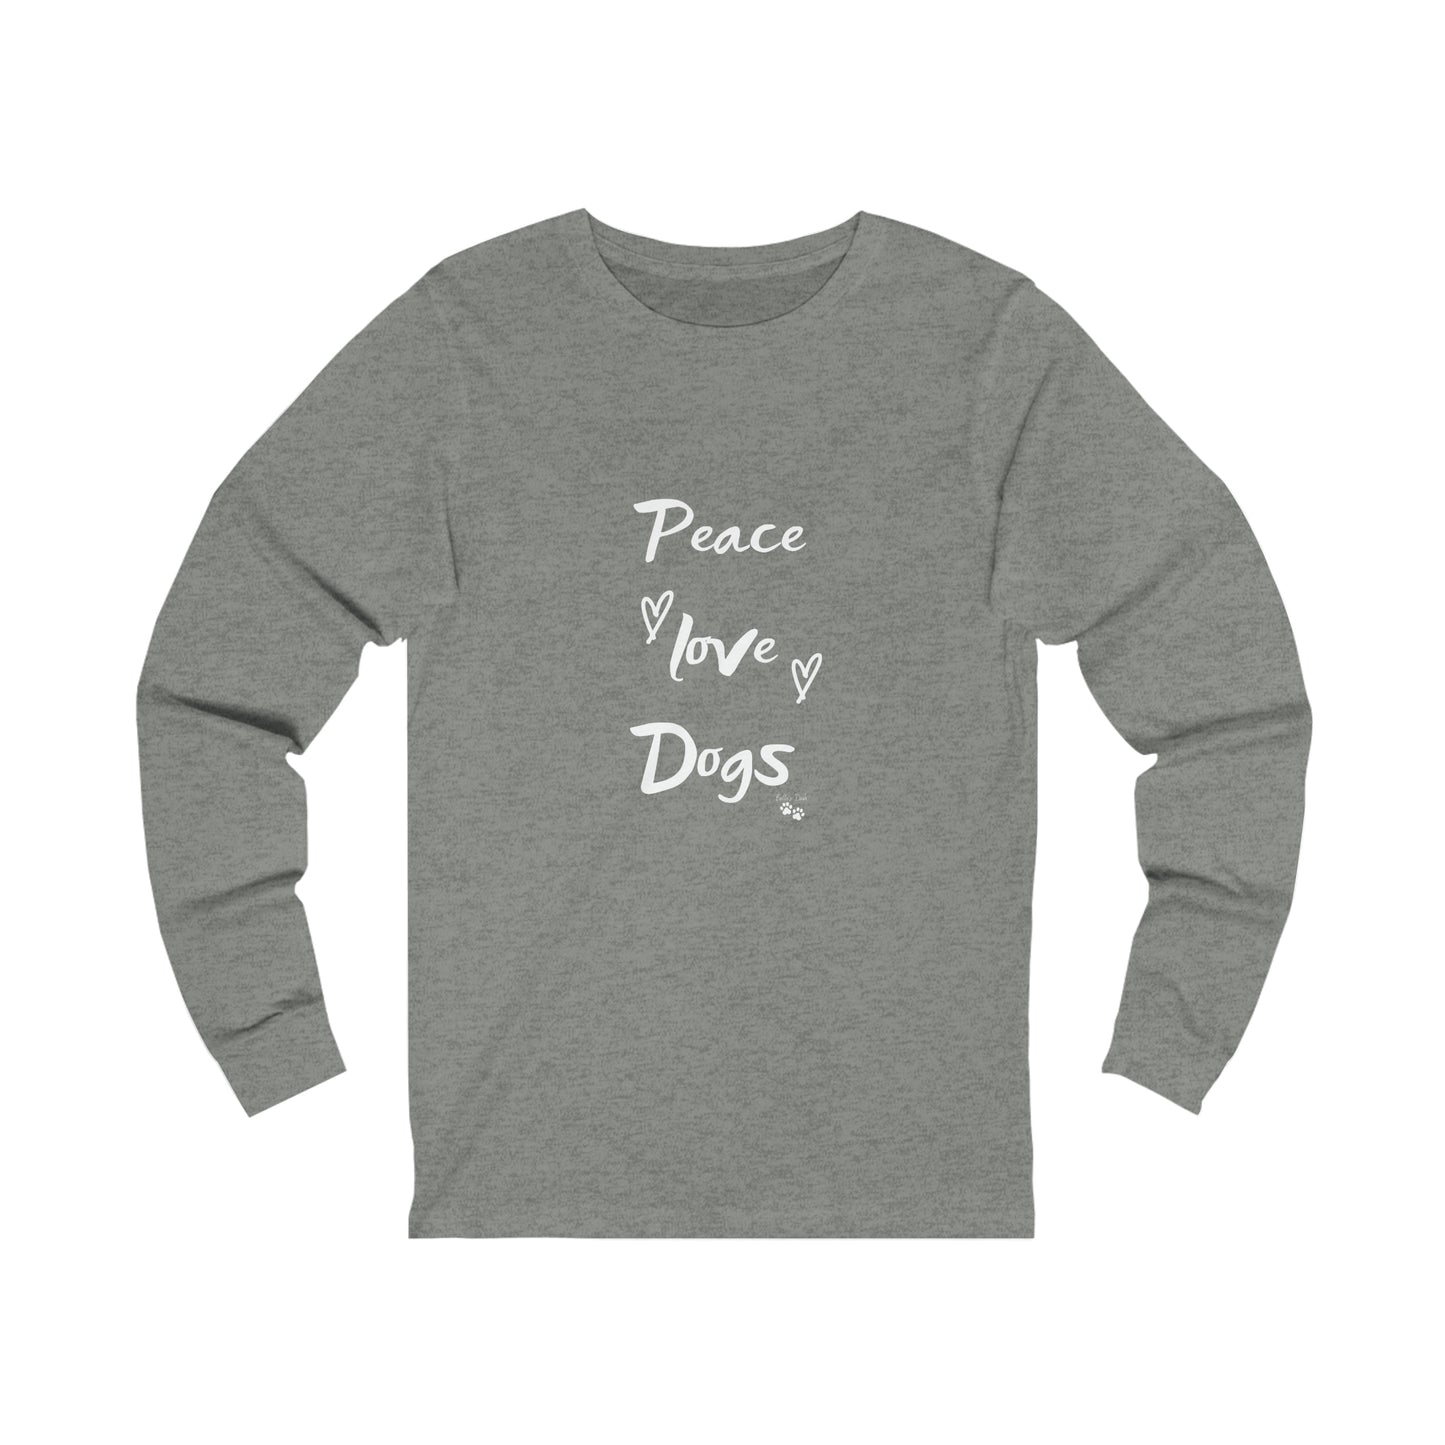 Peace love Dogs Jersey Long Sleeve Tee